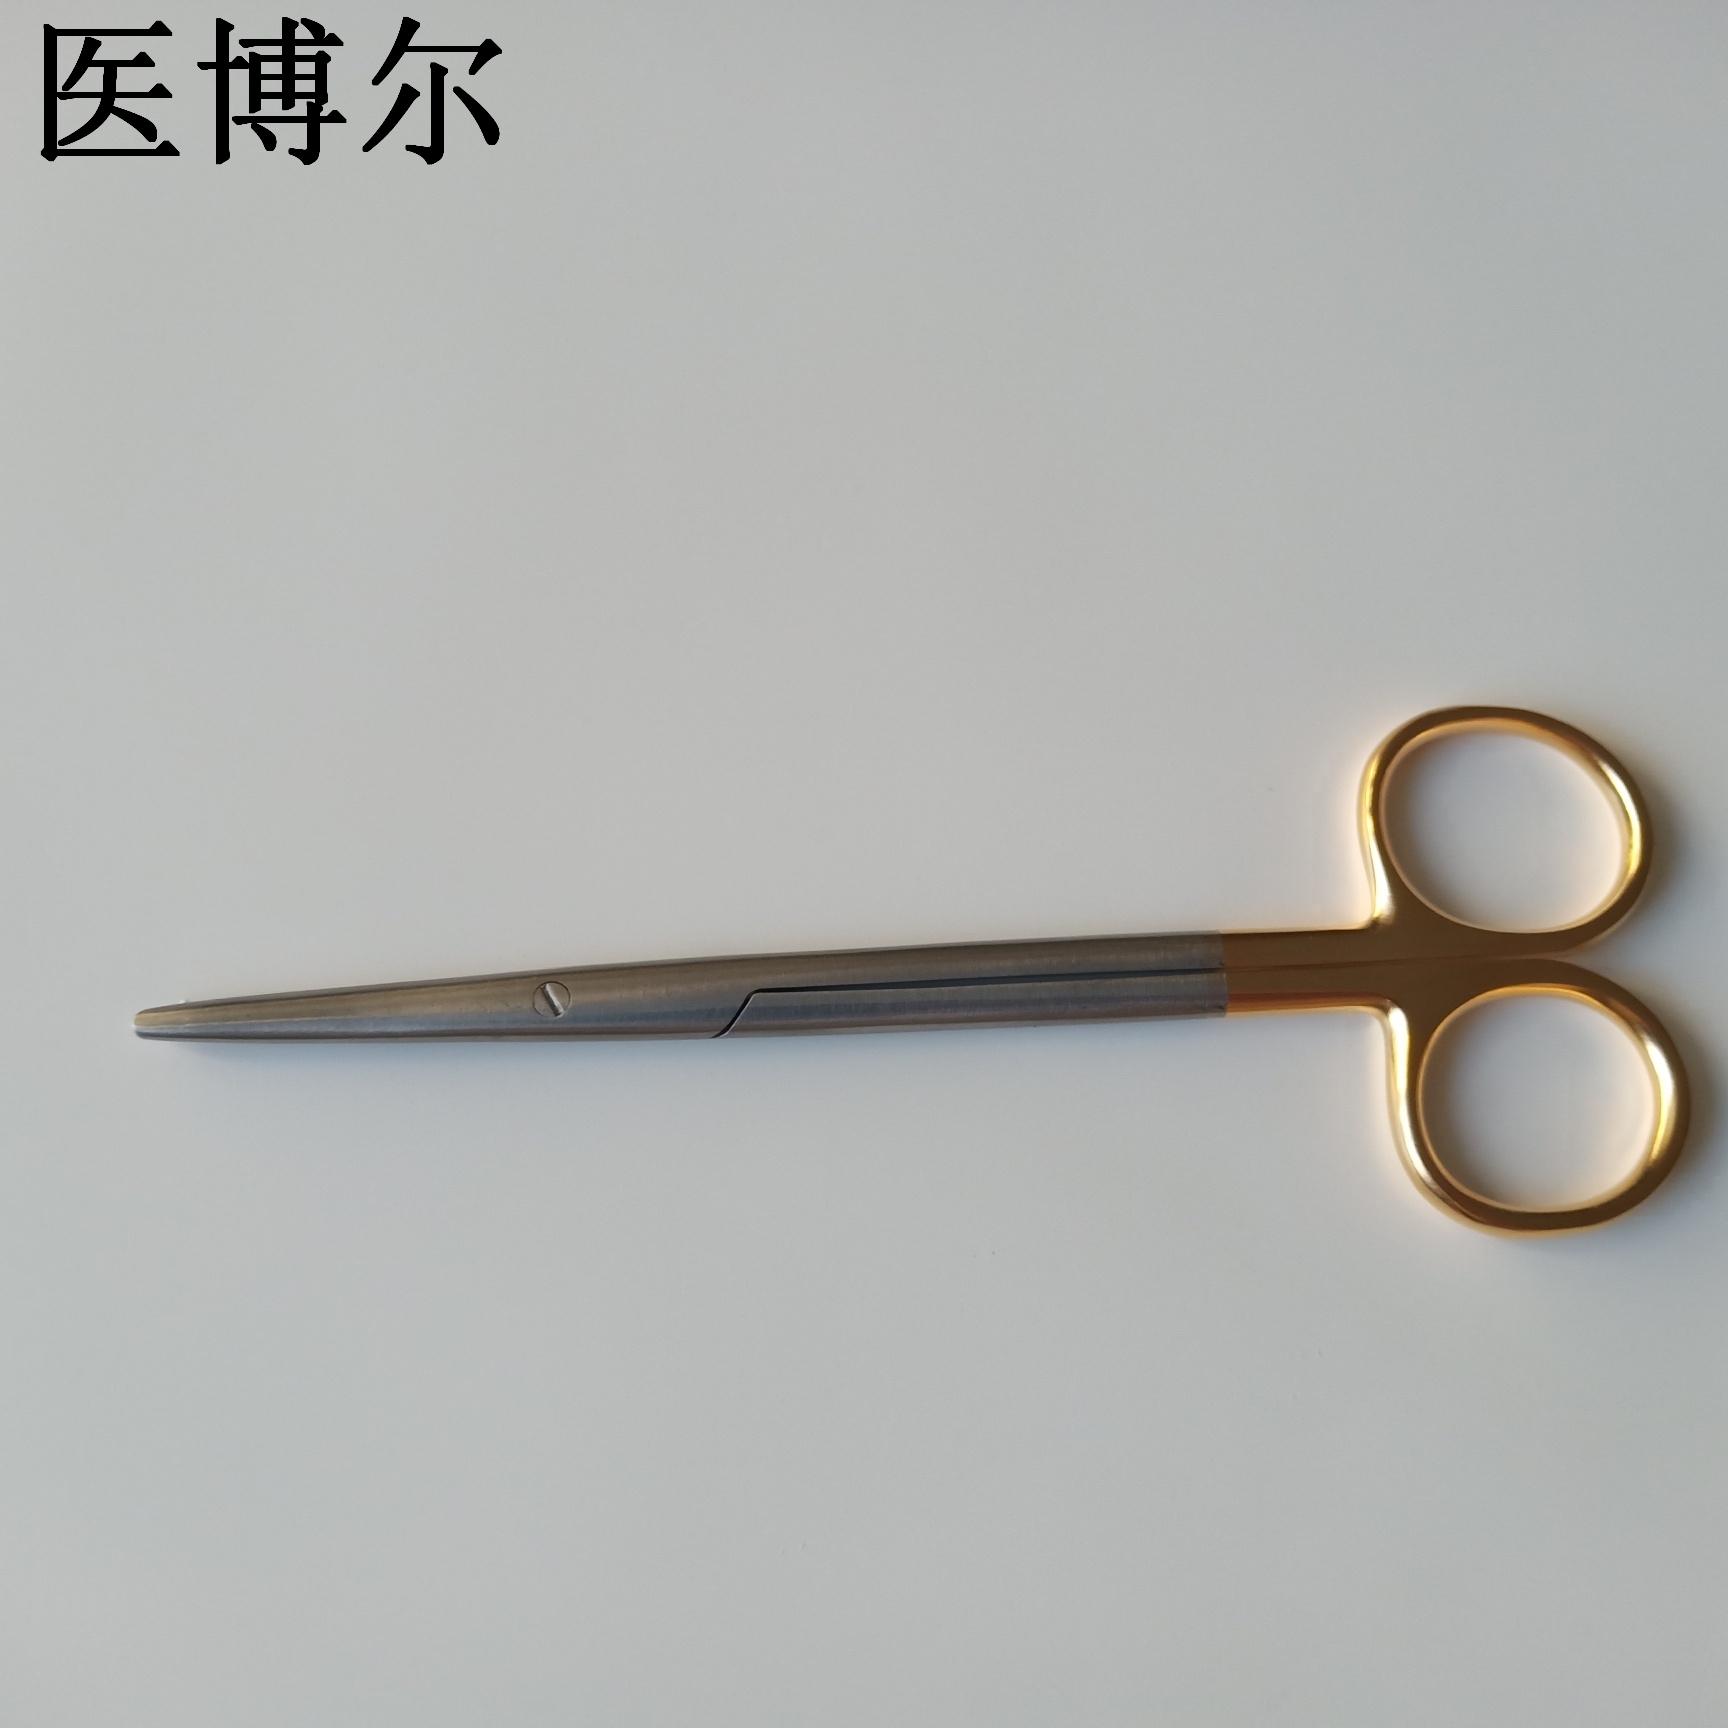 14cm精细直圆剪刀 (5).jpg